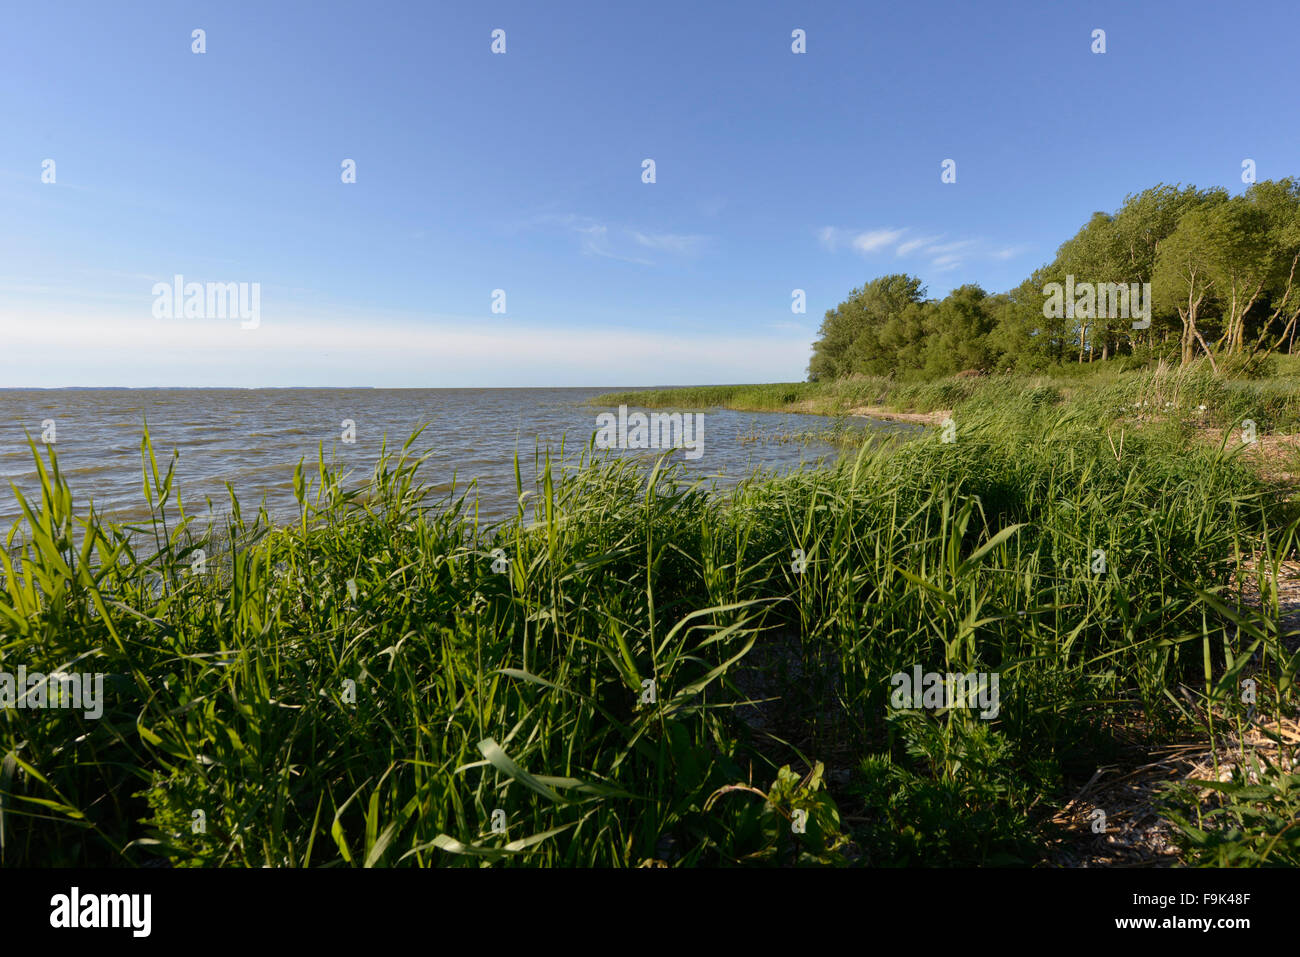 reed bed at vente, vente cape (ventes ragas), nemunas delta, curonian lagoon (kursiu marios), lithuania Stock Photo